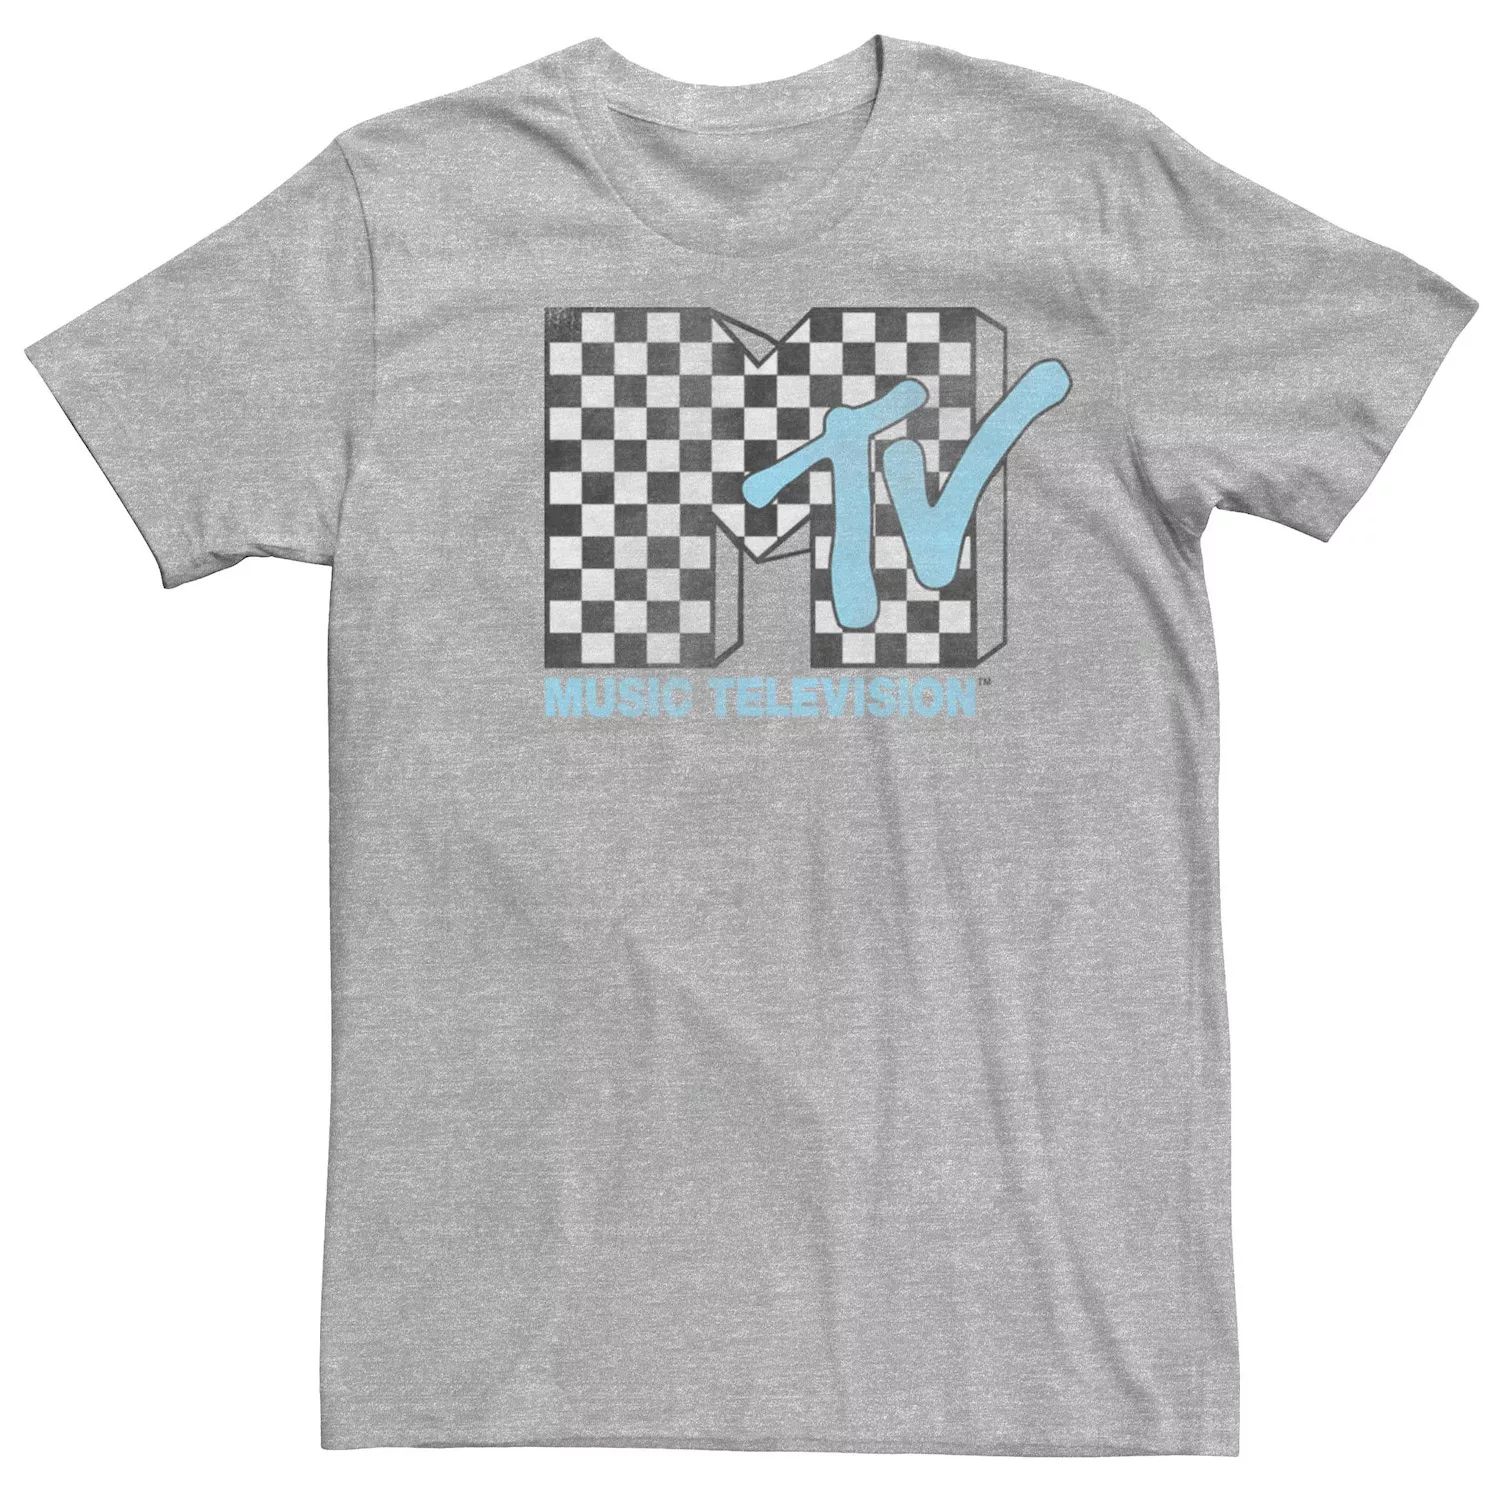 цена Мужская футболка с коротким рукавом и клетчатым логотипом MTV Vintage Licensed Character